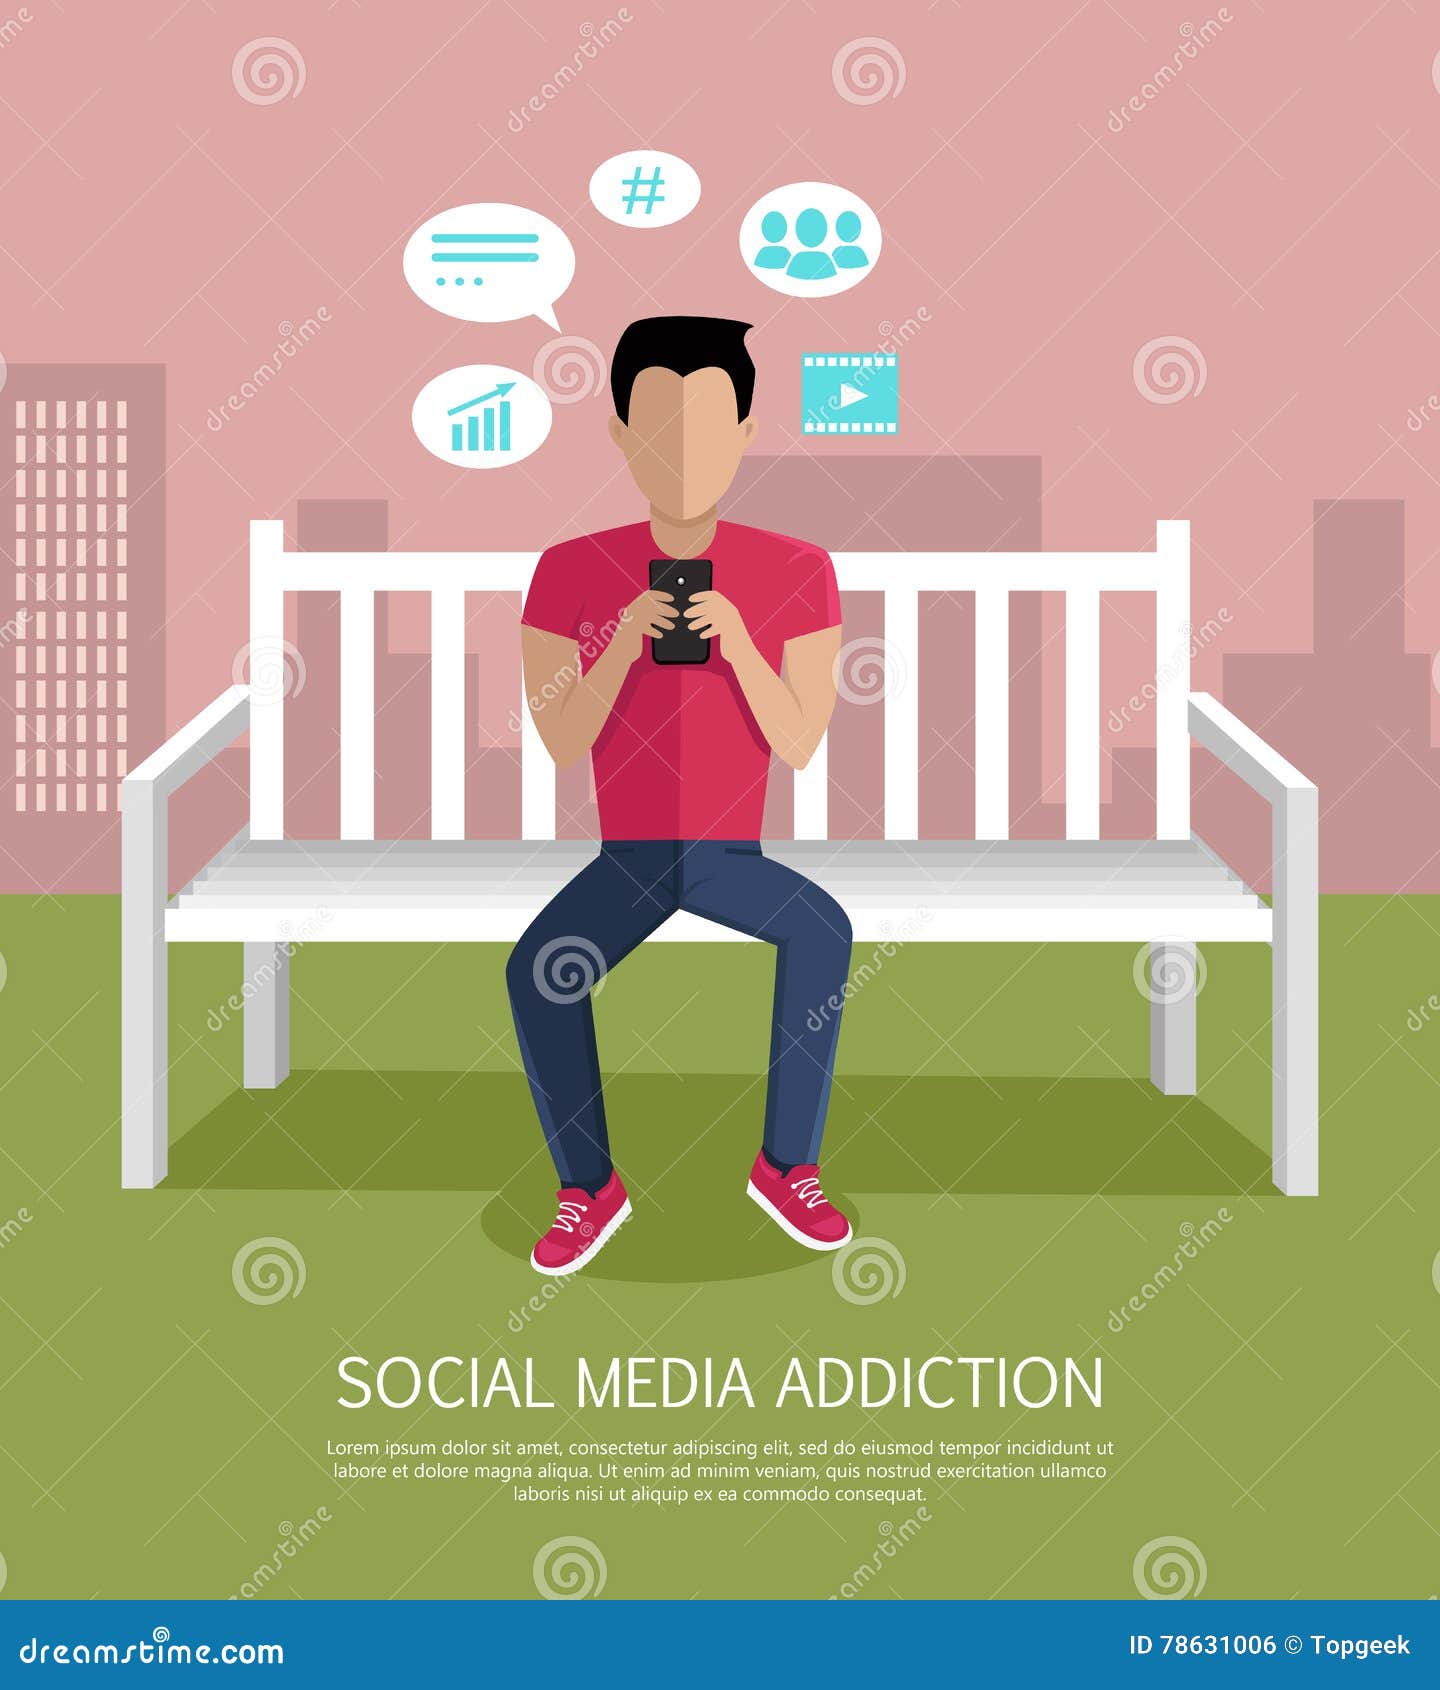 Social Media Addiction Concept Vector Illustration Stock Vector